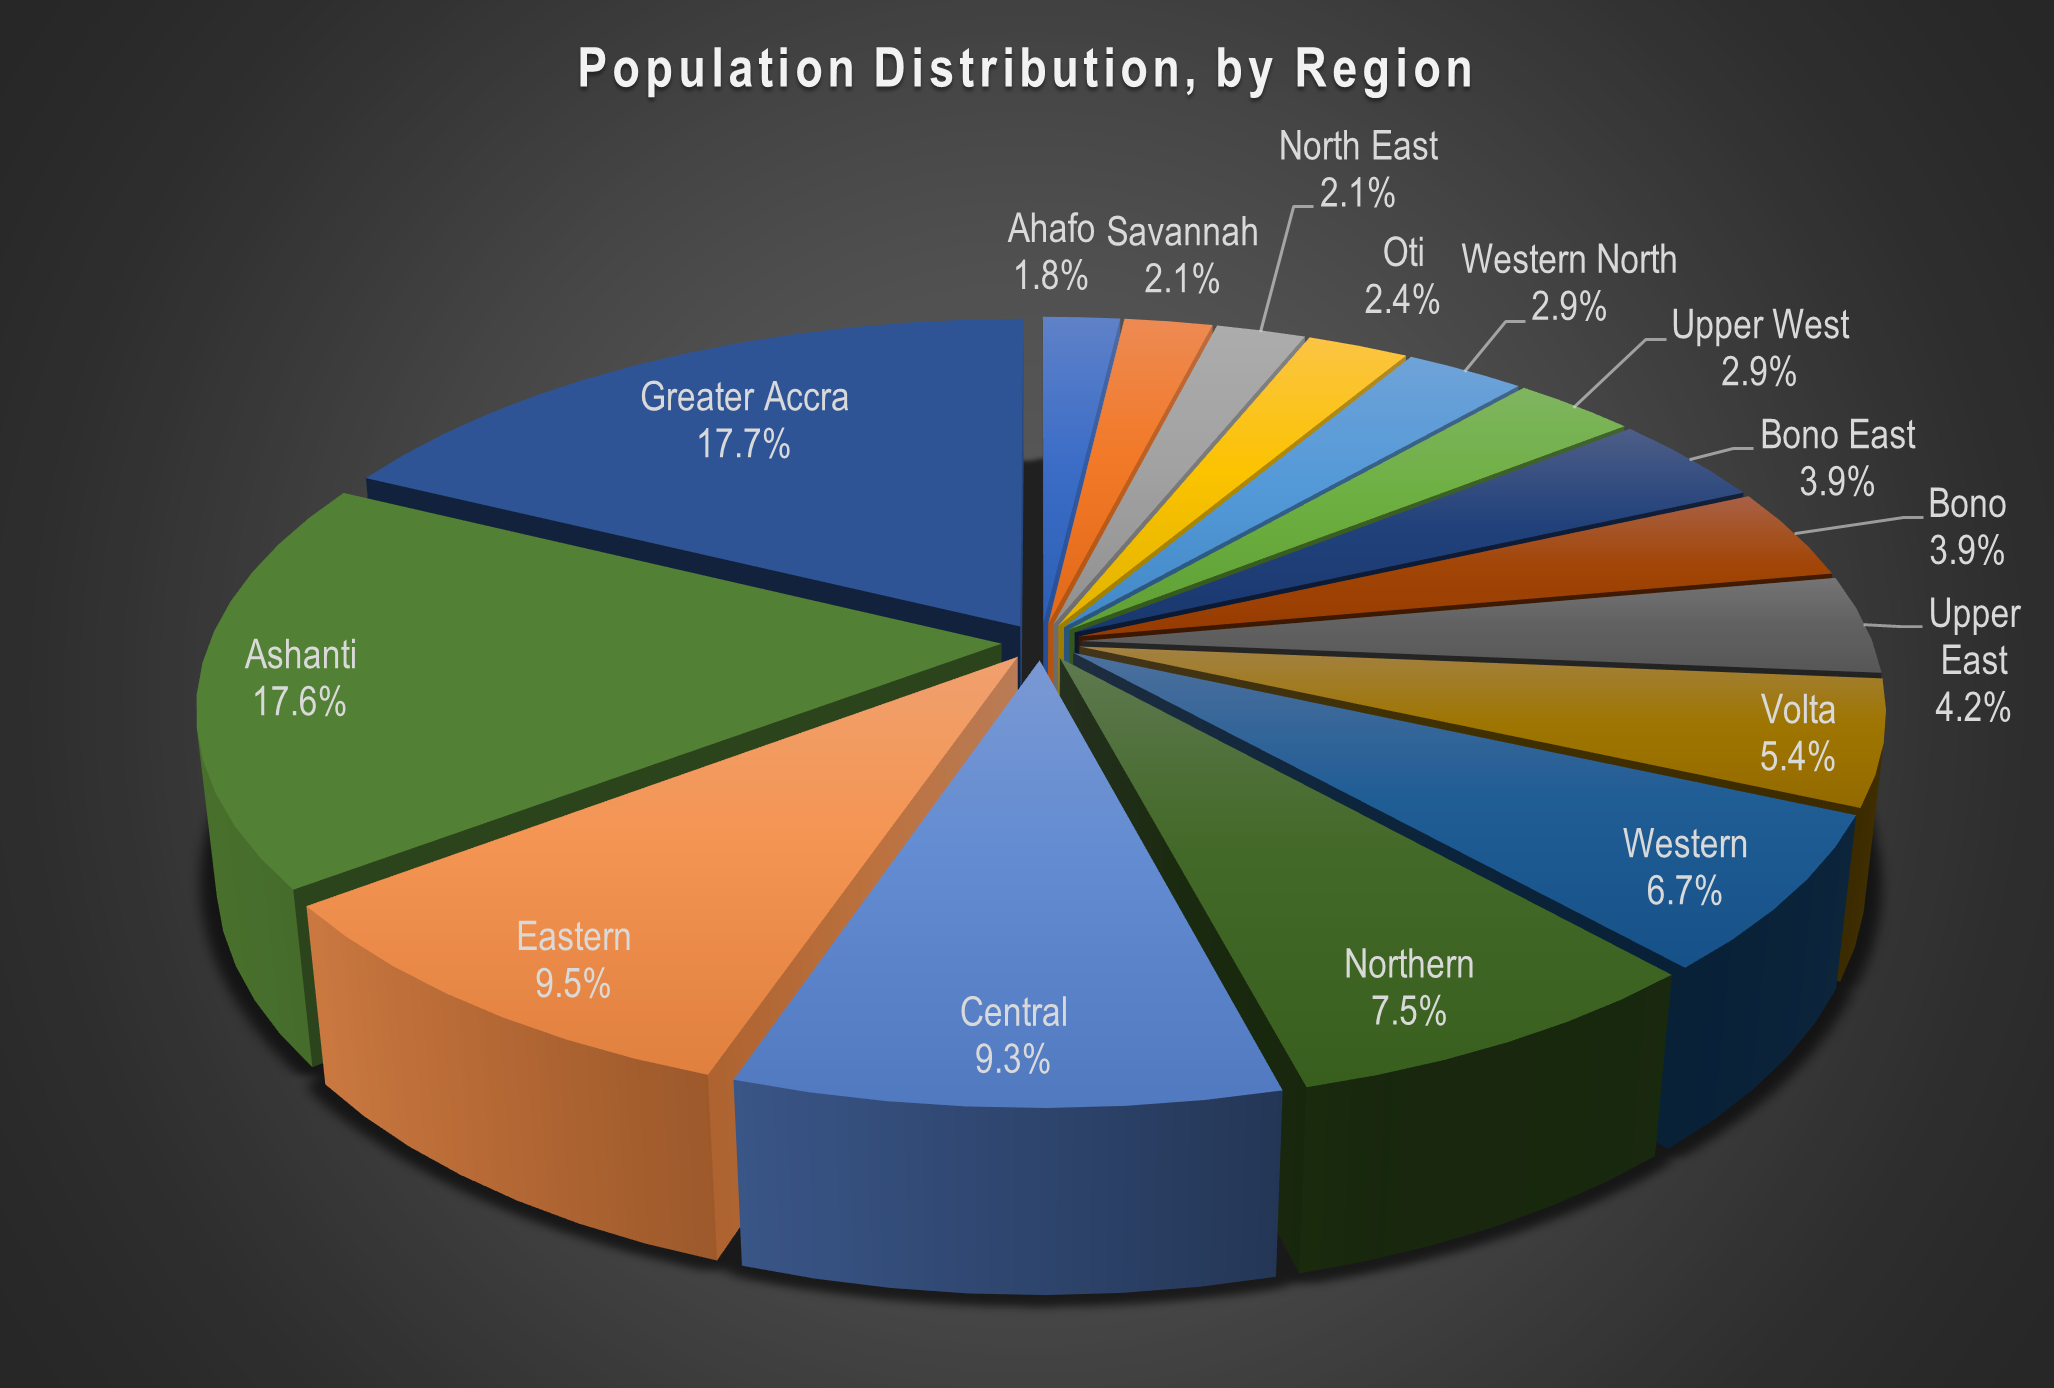 Population distribution by region